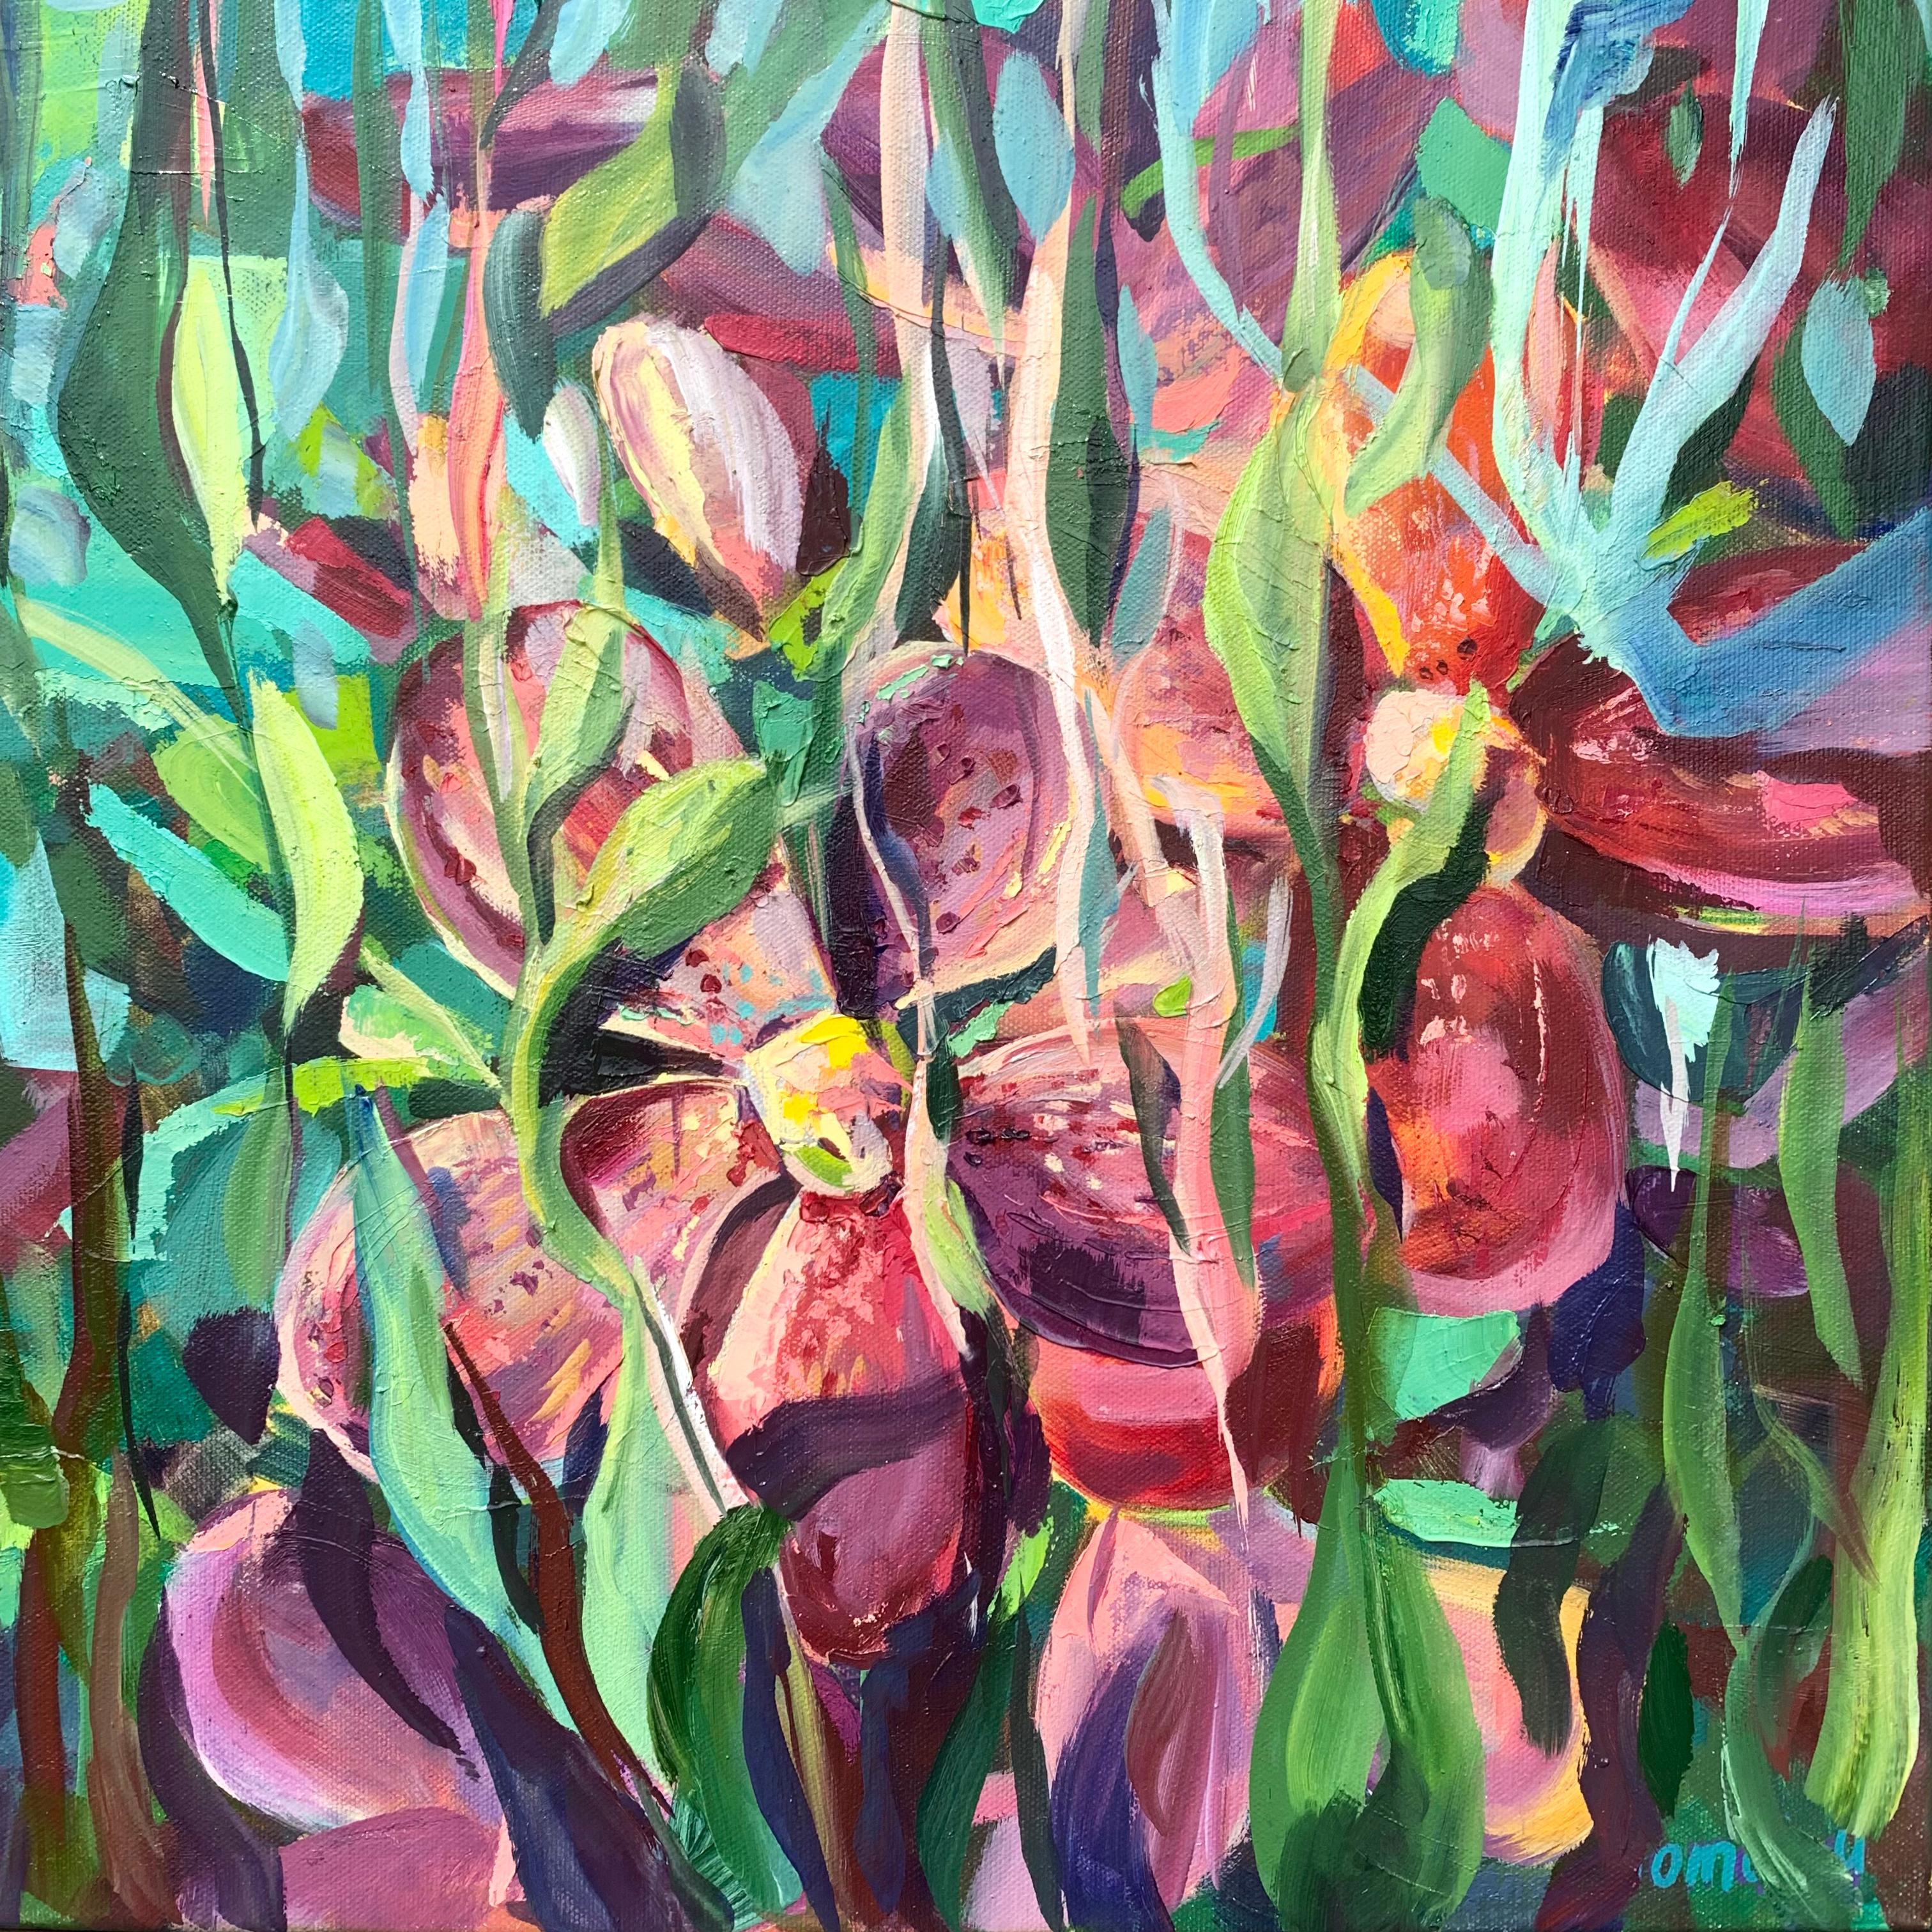 Momalyu Liubov Abstract Painting – "Blume  Garten. Rosa Orchideen mit Blattwerk". Ölgemälde auf Leinwand. 